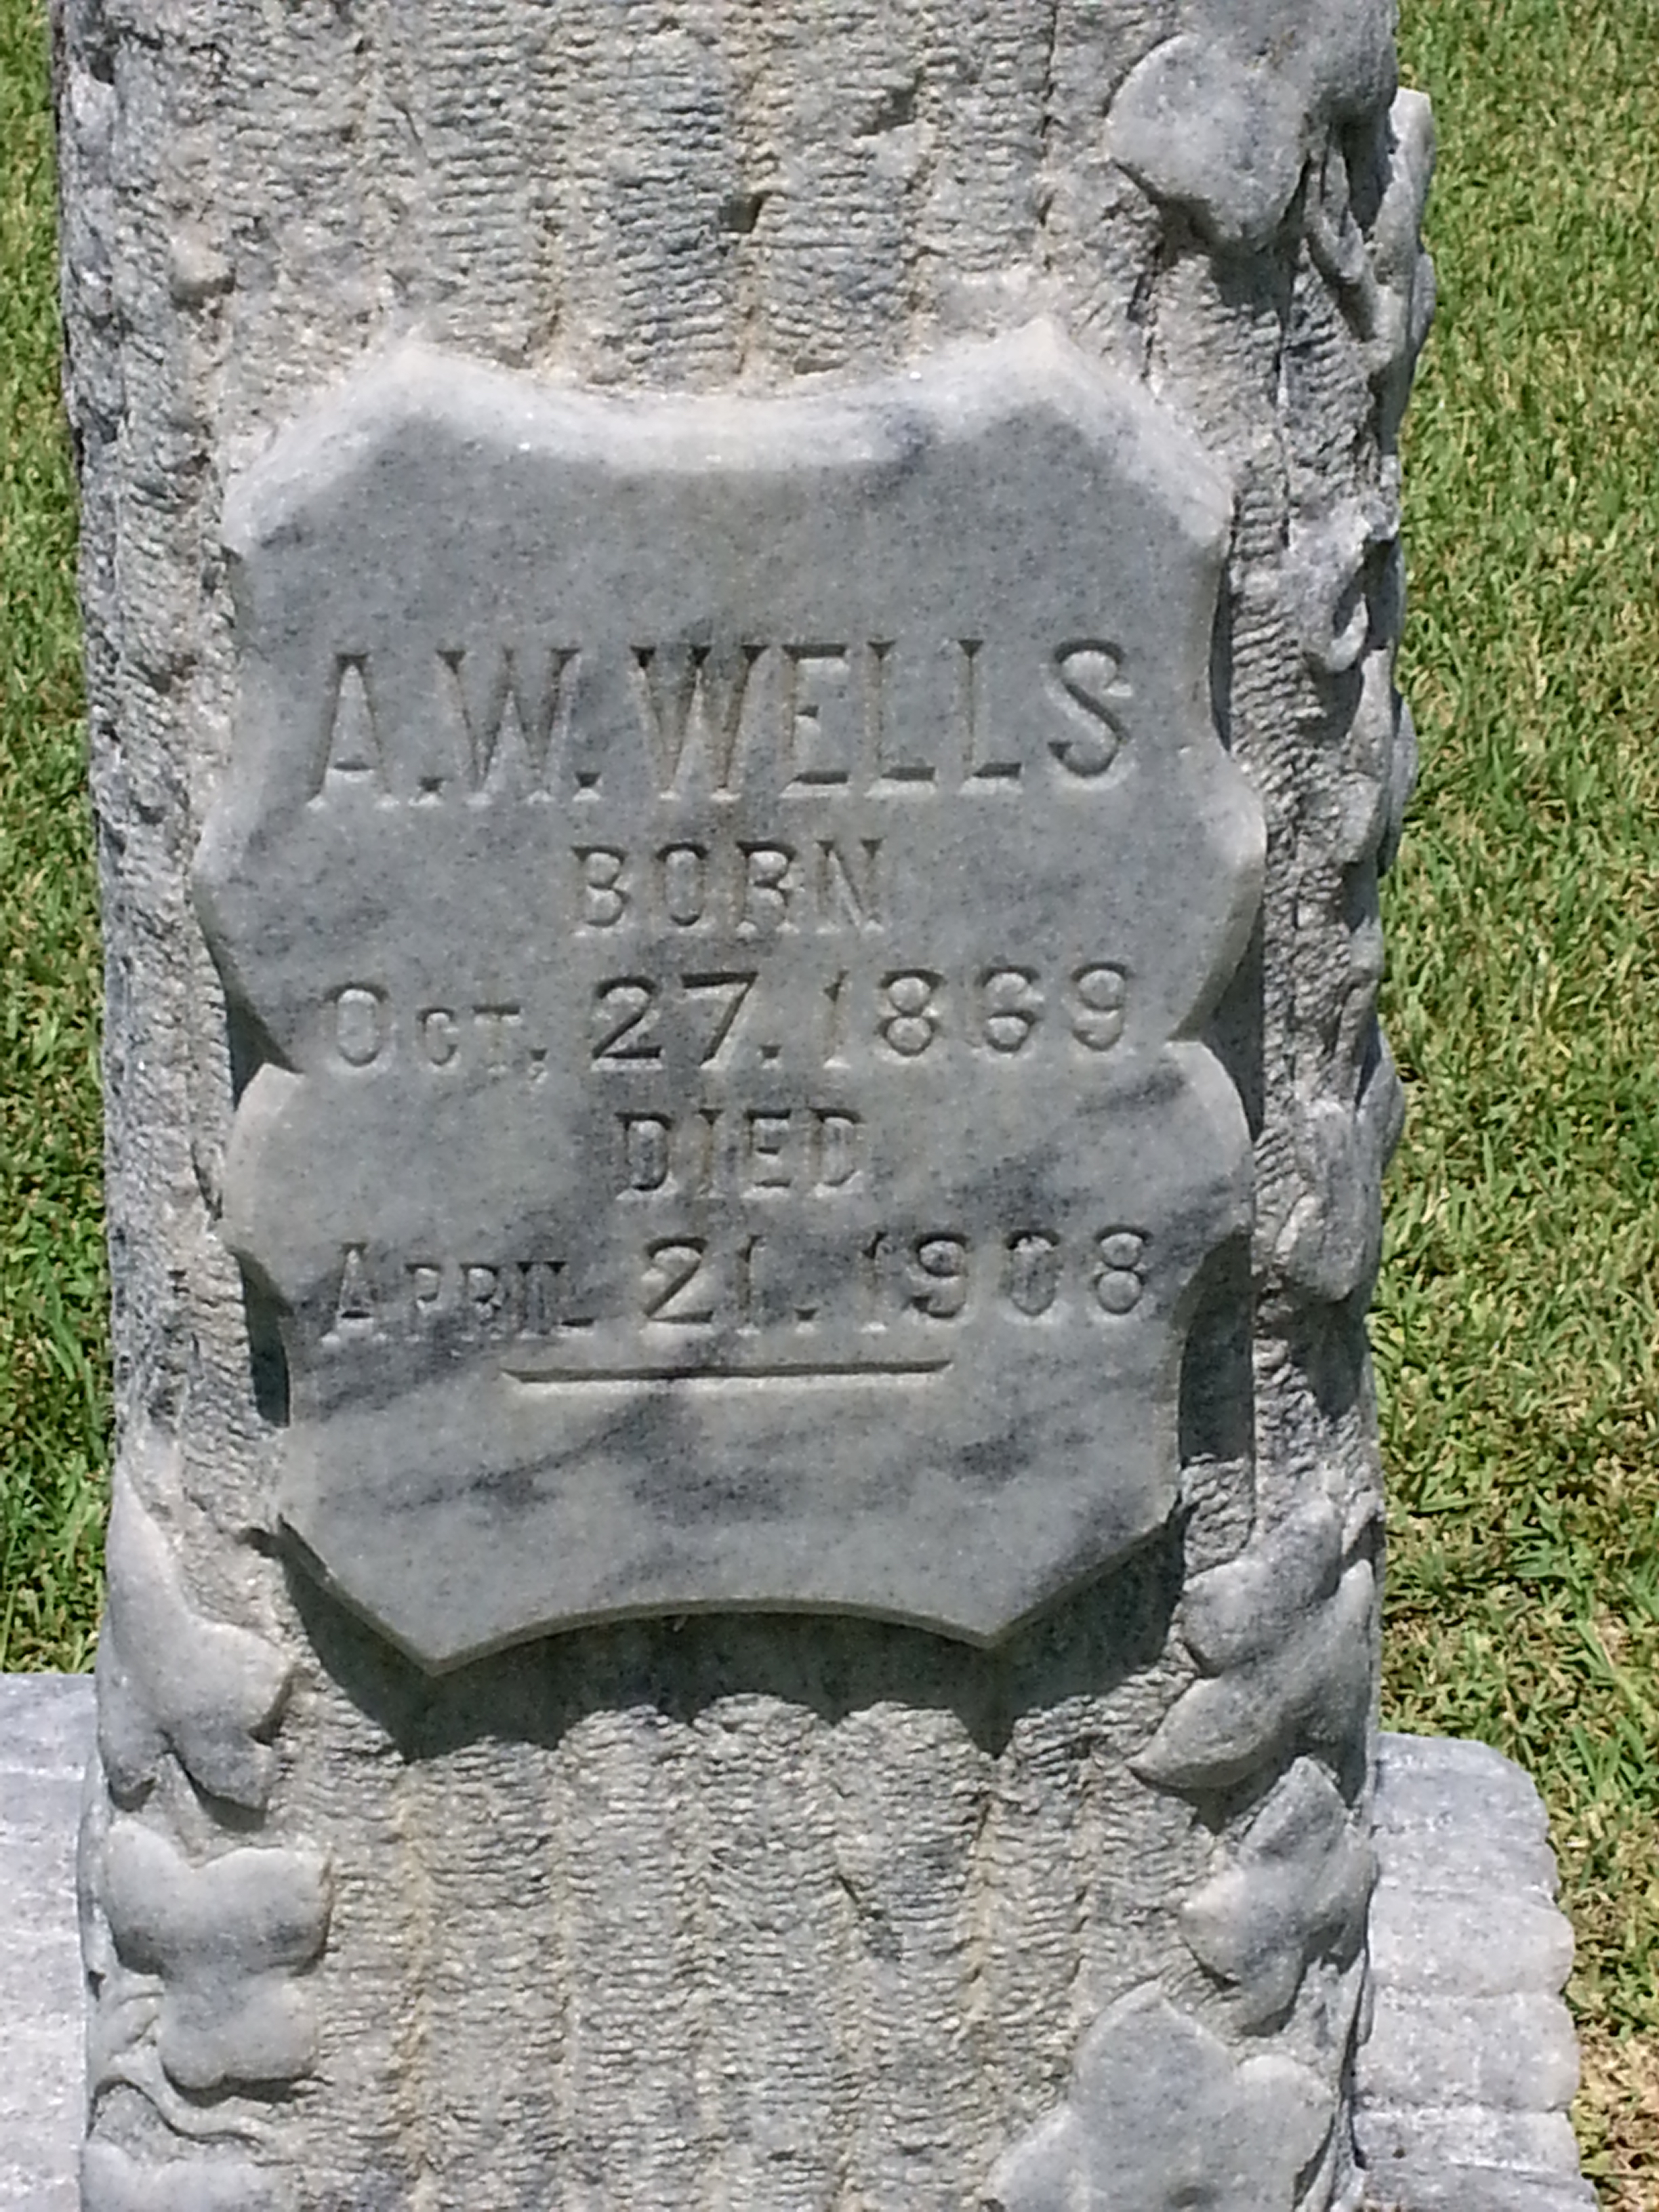 A W Wells